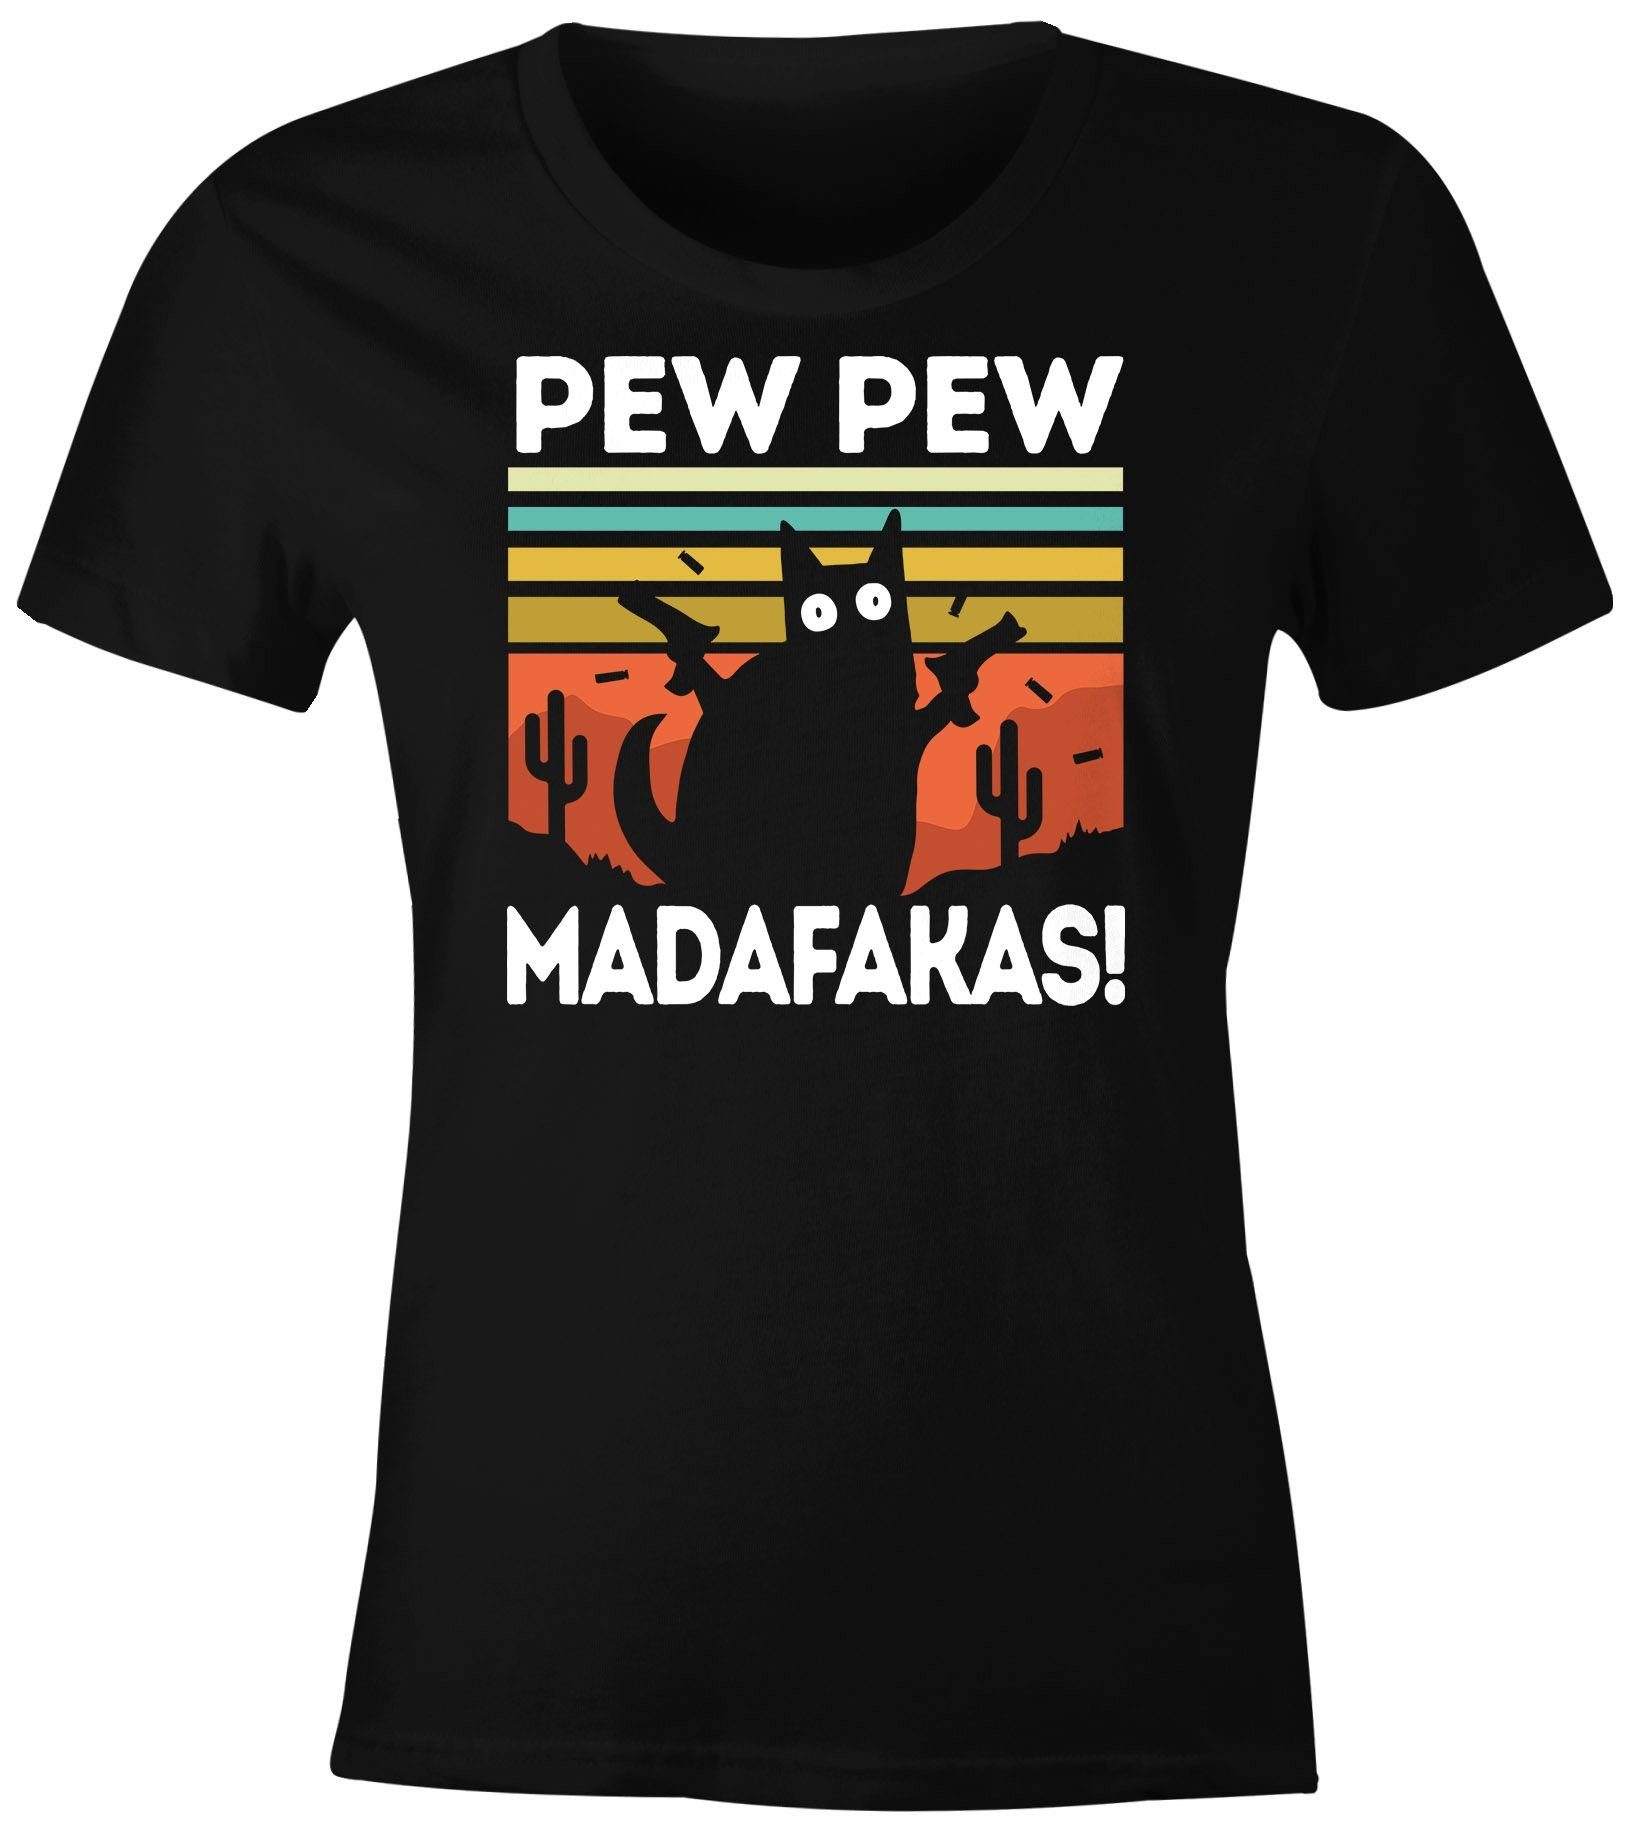 MoonWorks Moonworks® schwarze Madafakas! Damen lustig Spruch Meme Pew Fun-Shirt T-Shirt mit Katze Print Pew Frauen Print-Shirt